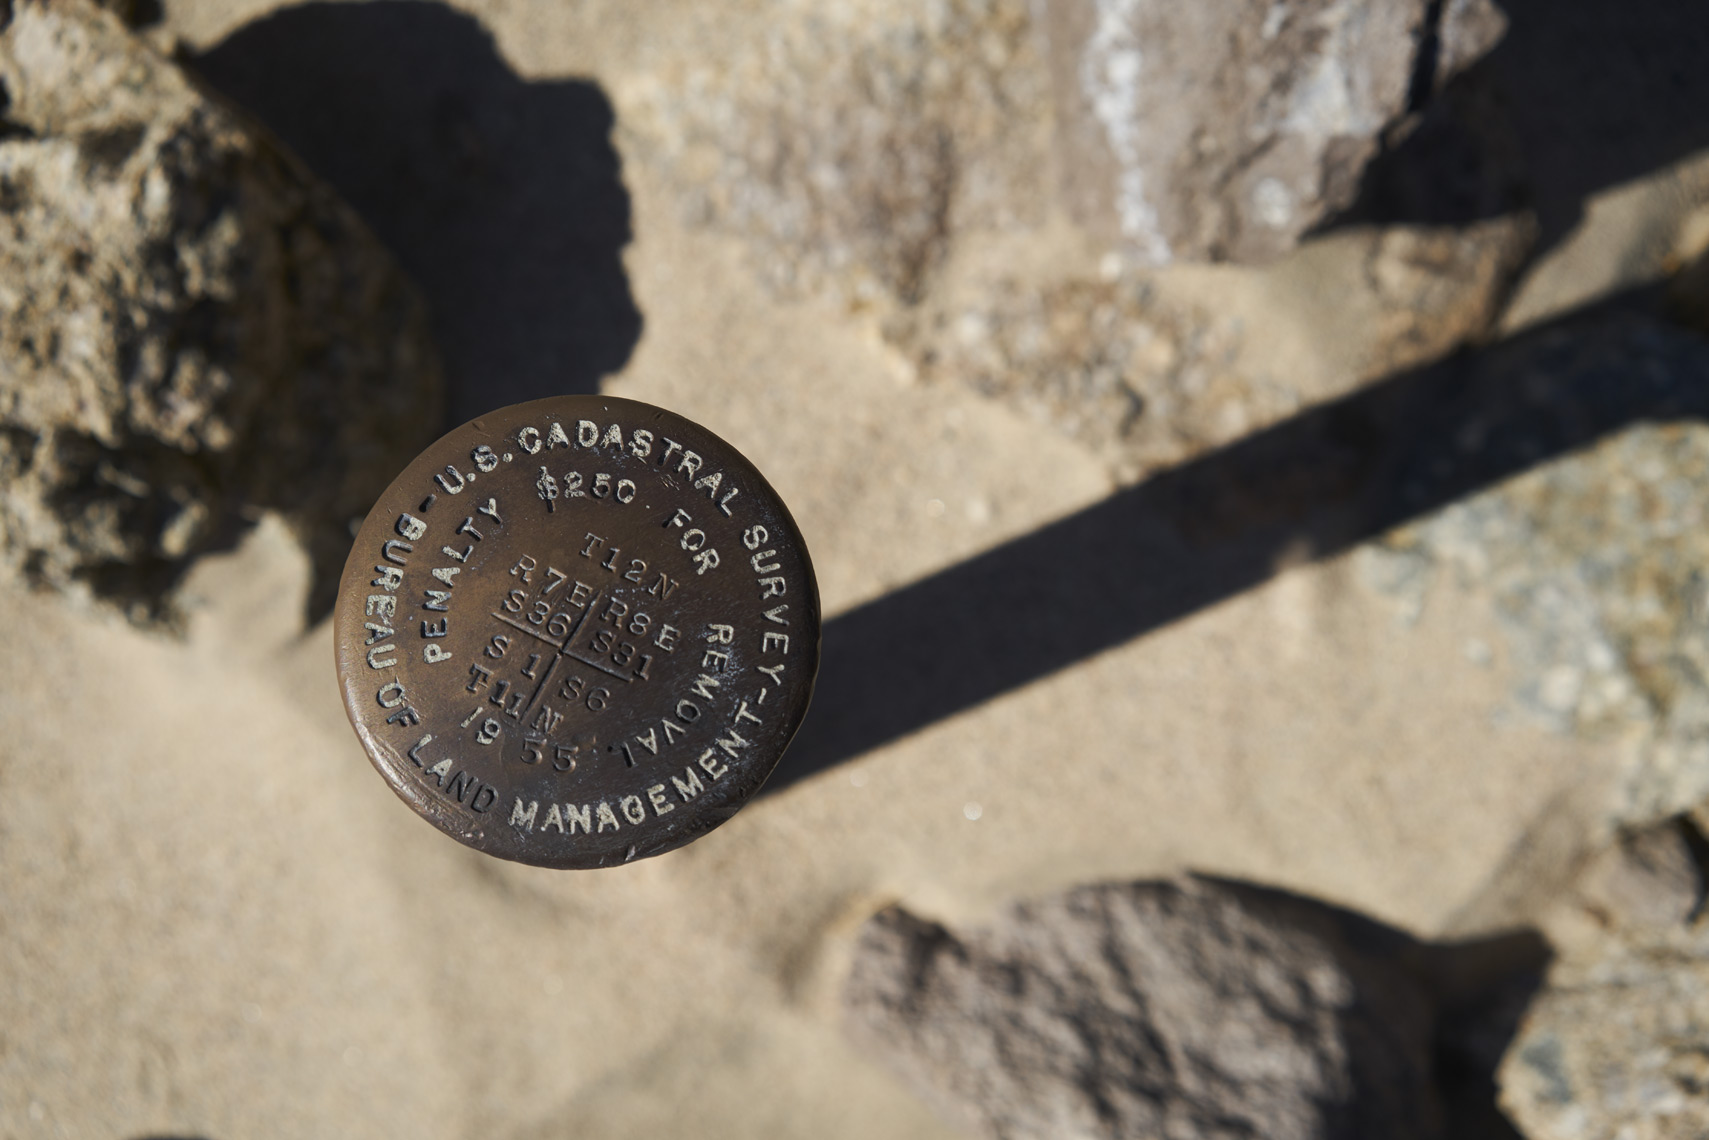 US Cadastral Survey marker in Marry M. Goldwater Range Desert Yuma Arizona Sean Dagen Photography